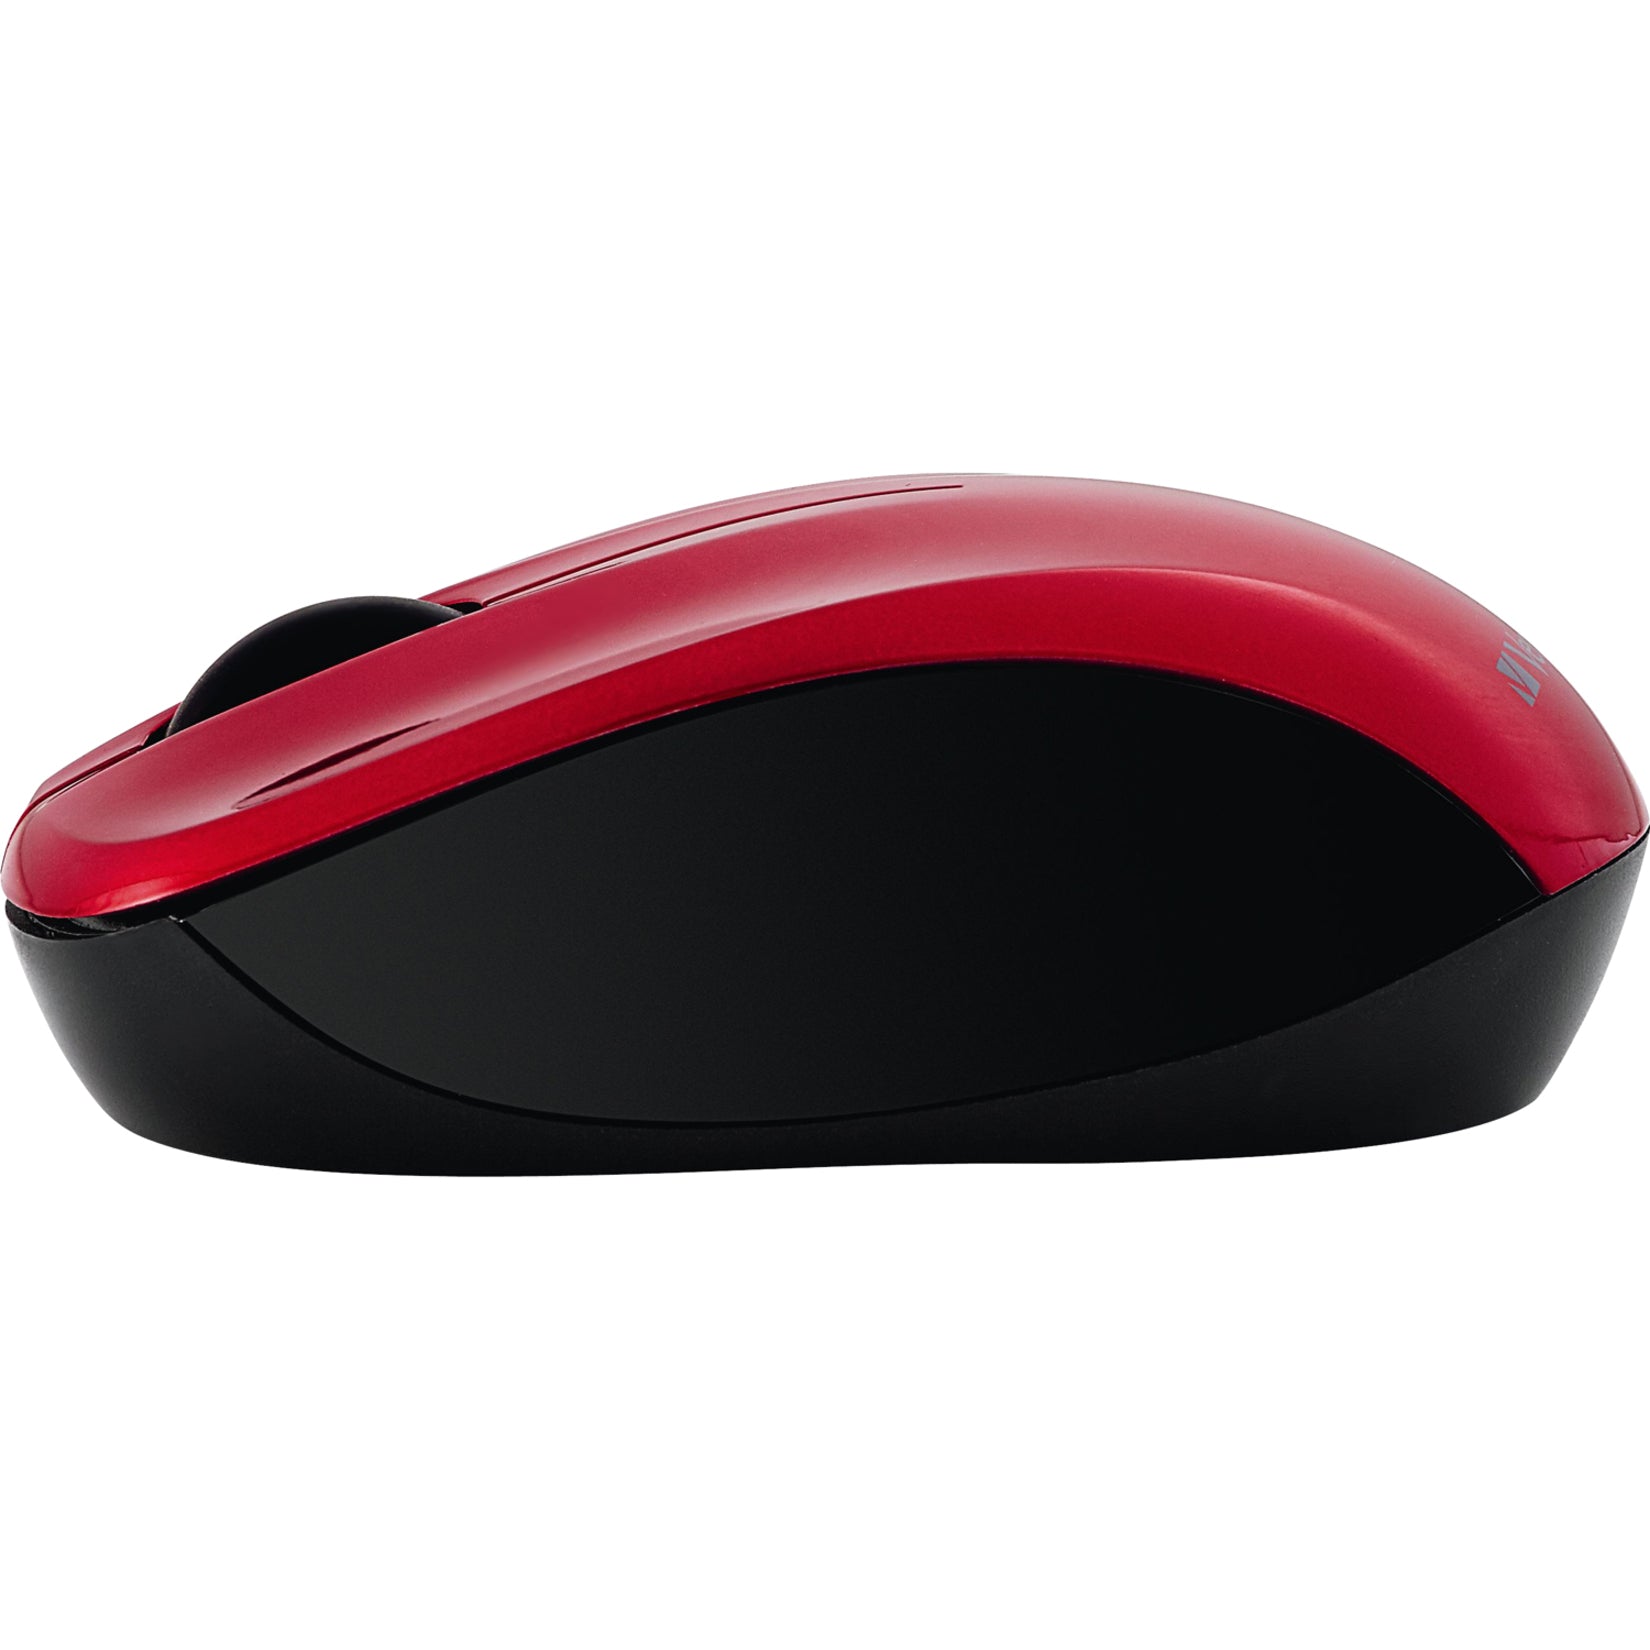 Verbatim 99780 Silent Wireless Blue LED Mouse, Red/Black, for PCs & Macs